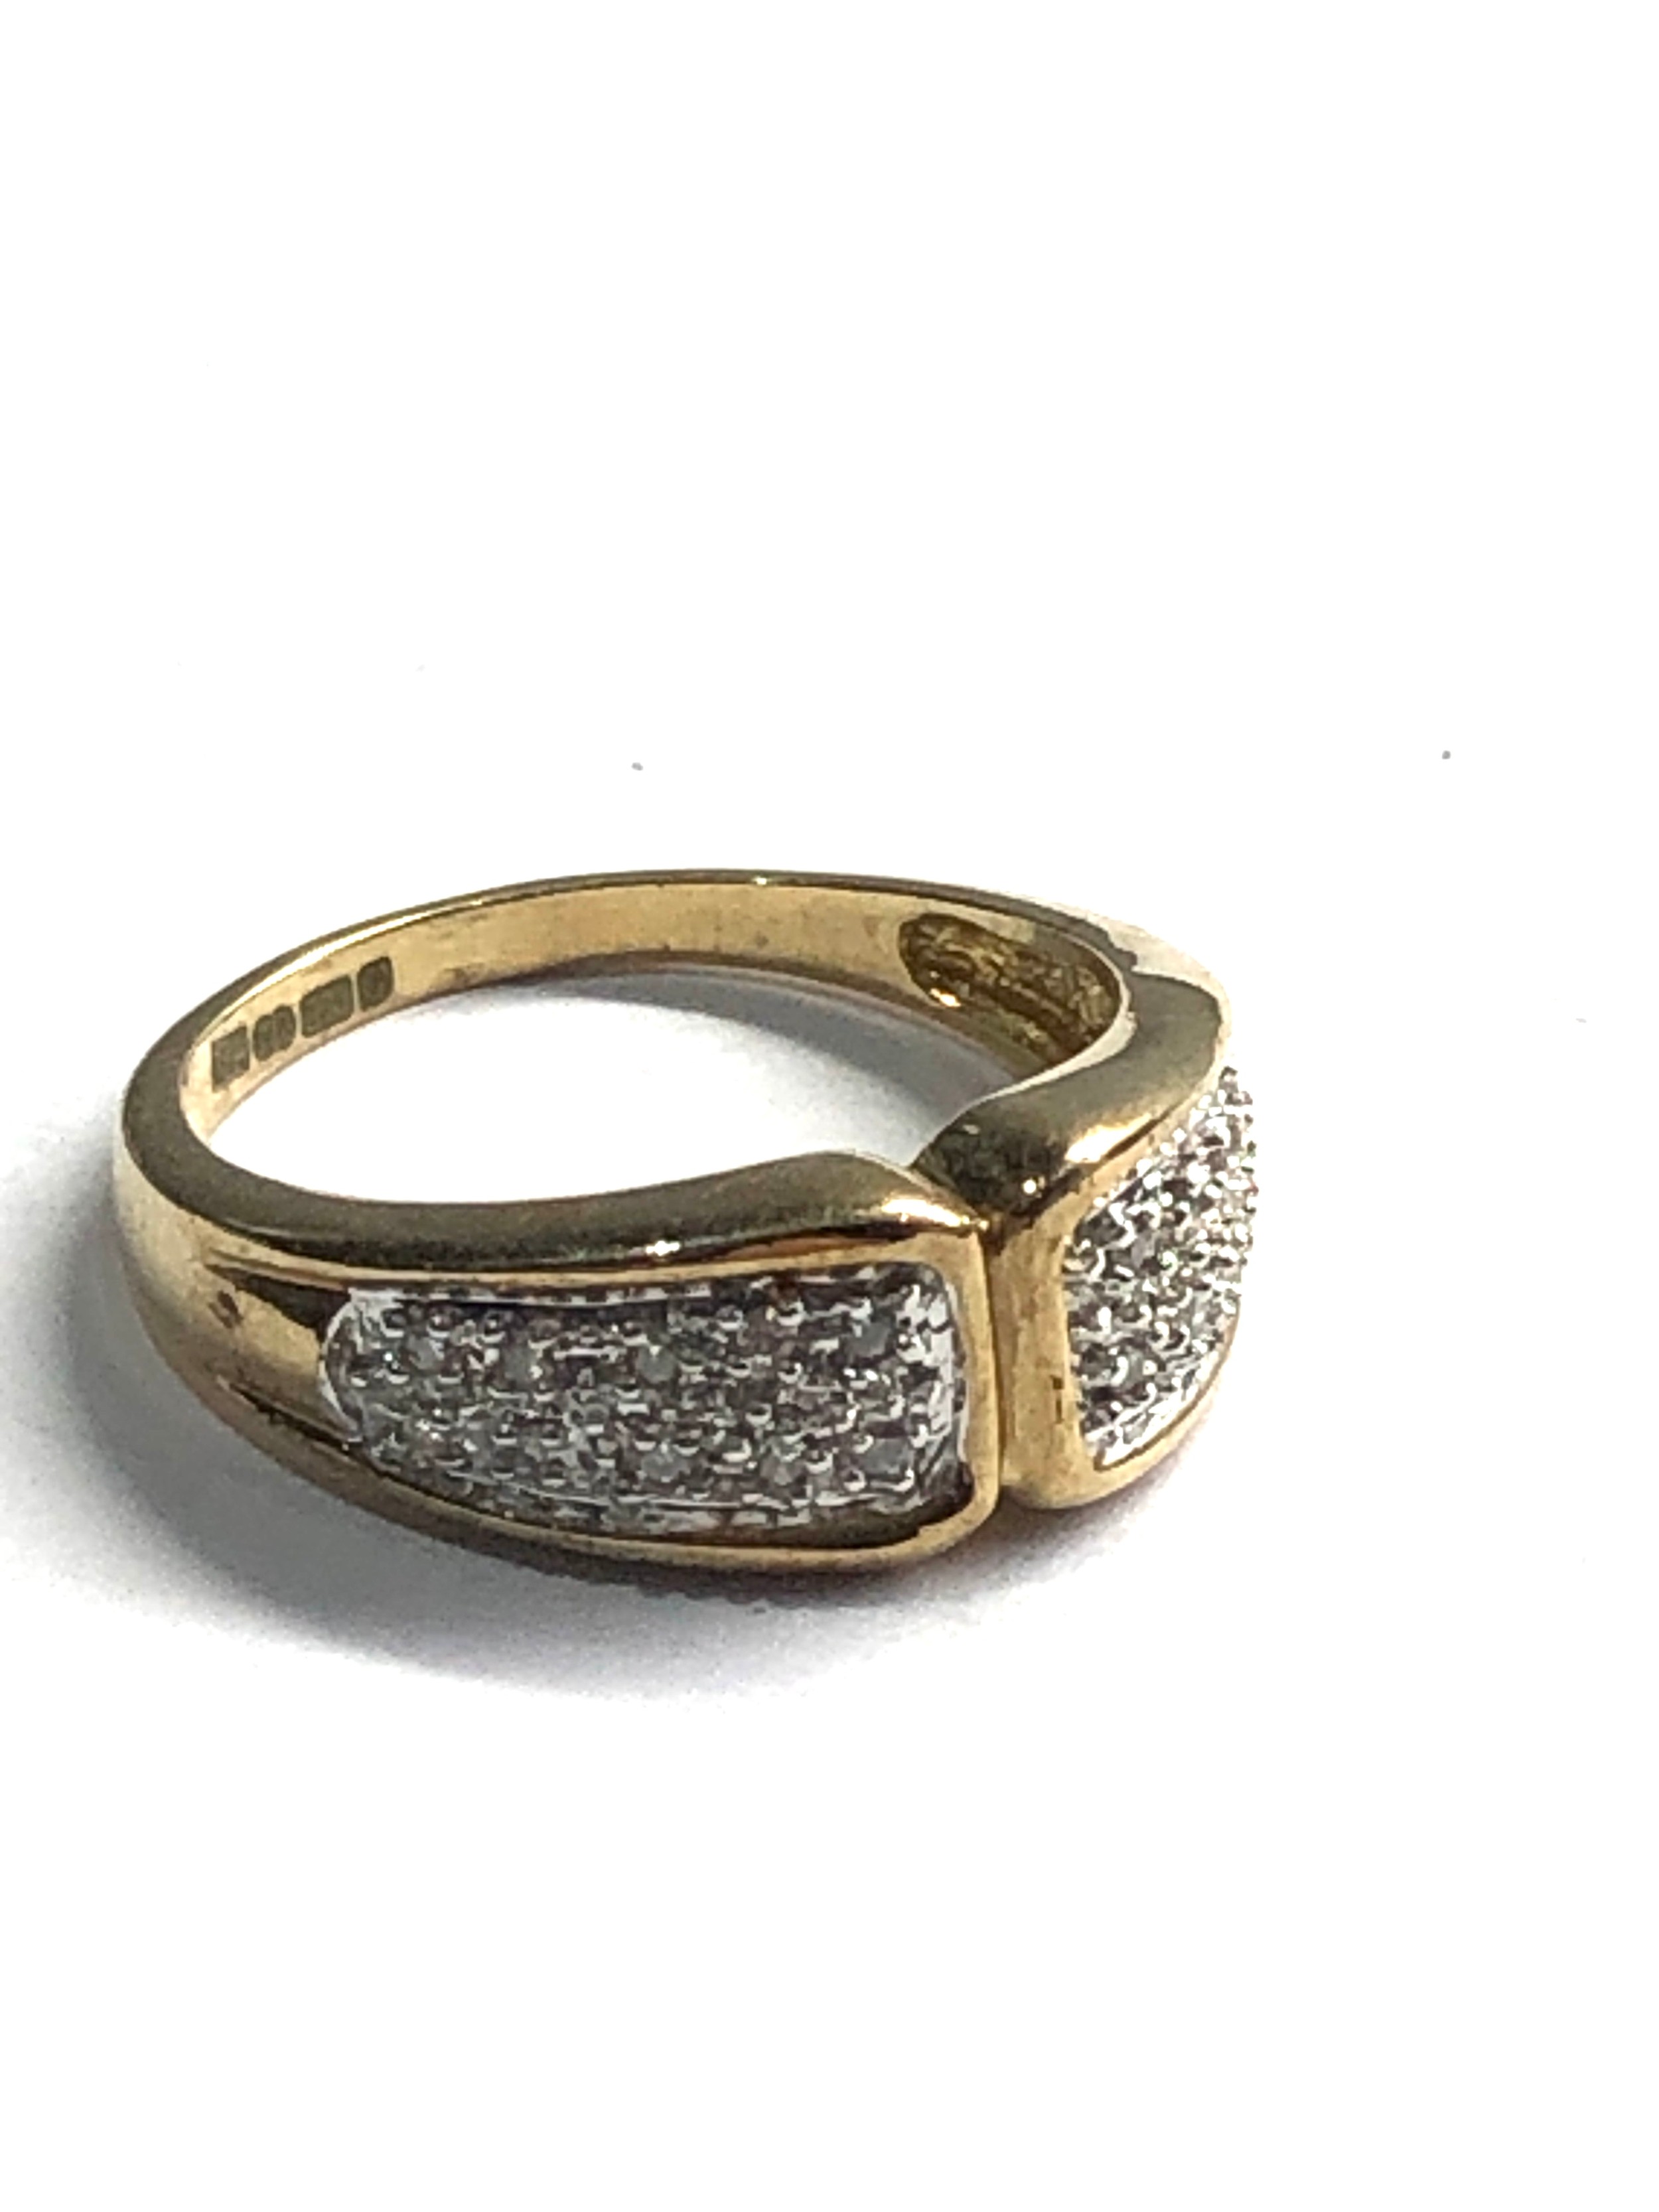 9ct gold diamond ring (3.2g) - Image 2 of 3